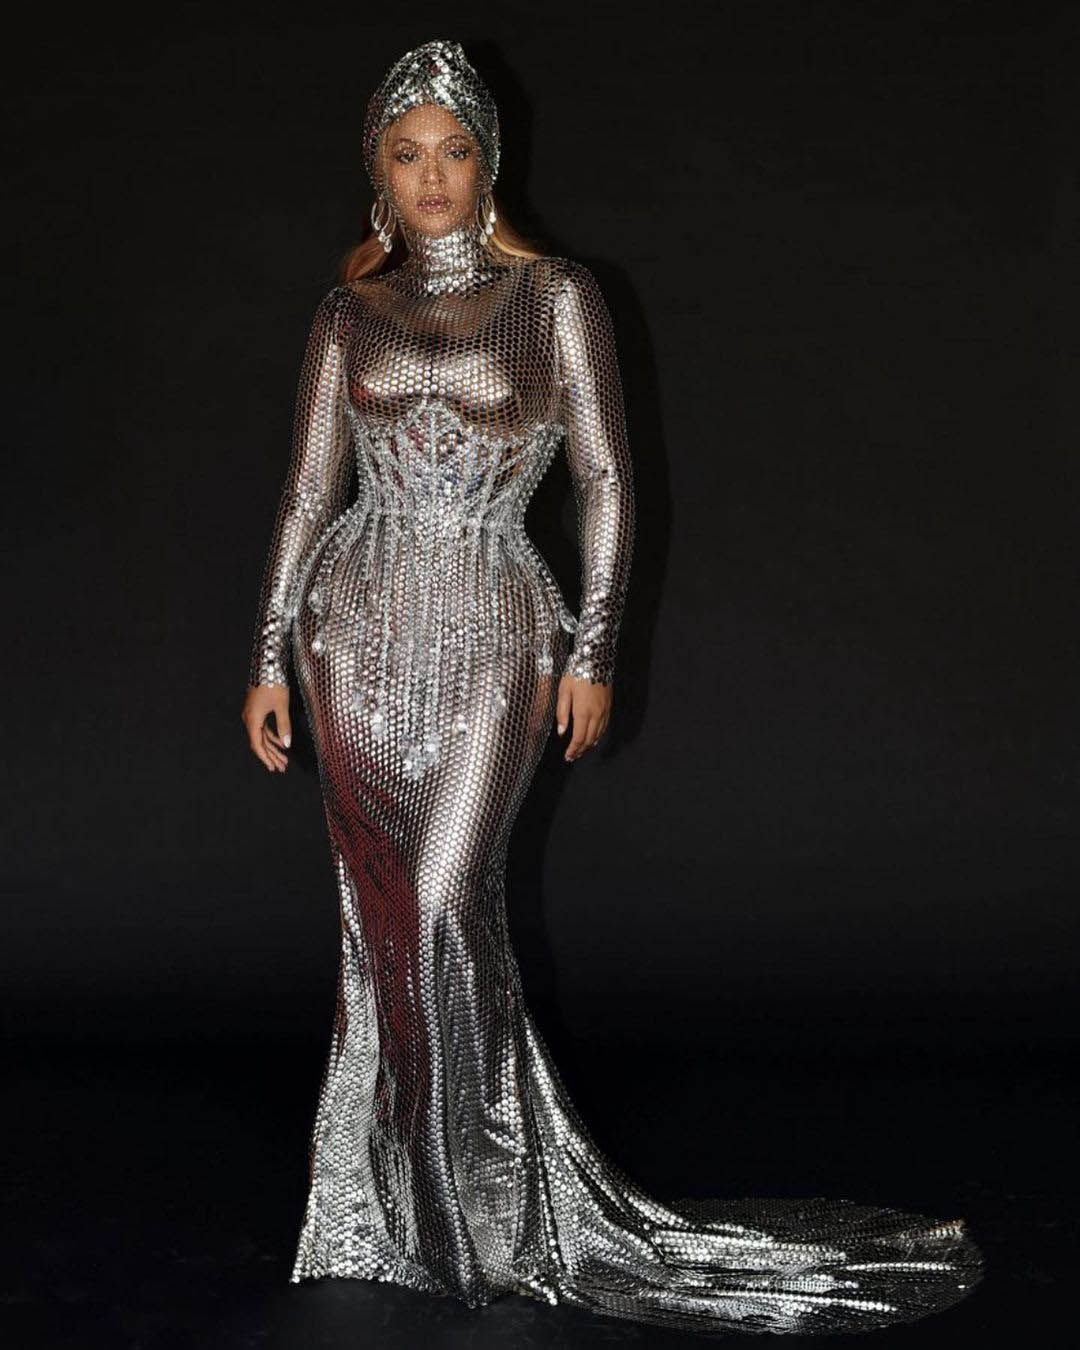 Beyoncé wearing Custom Burberry to the Grammy Awards 2021